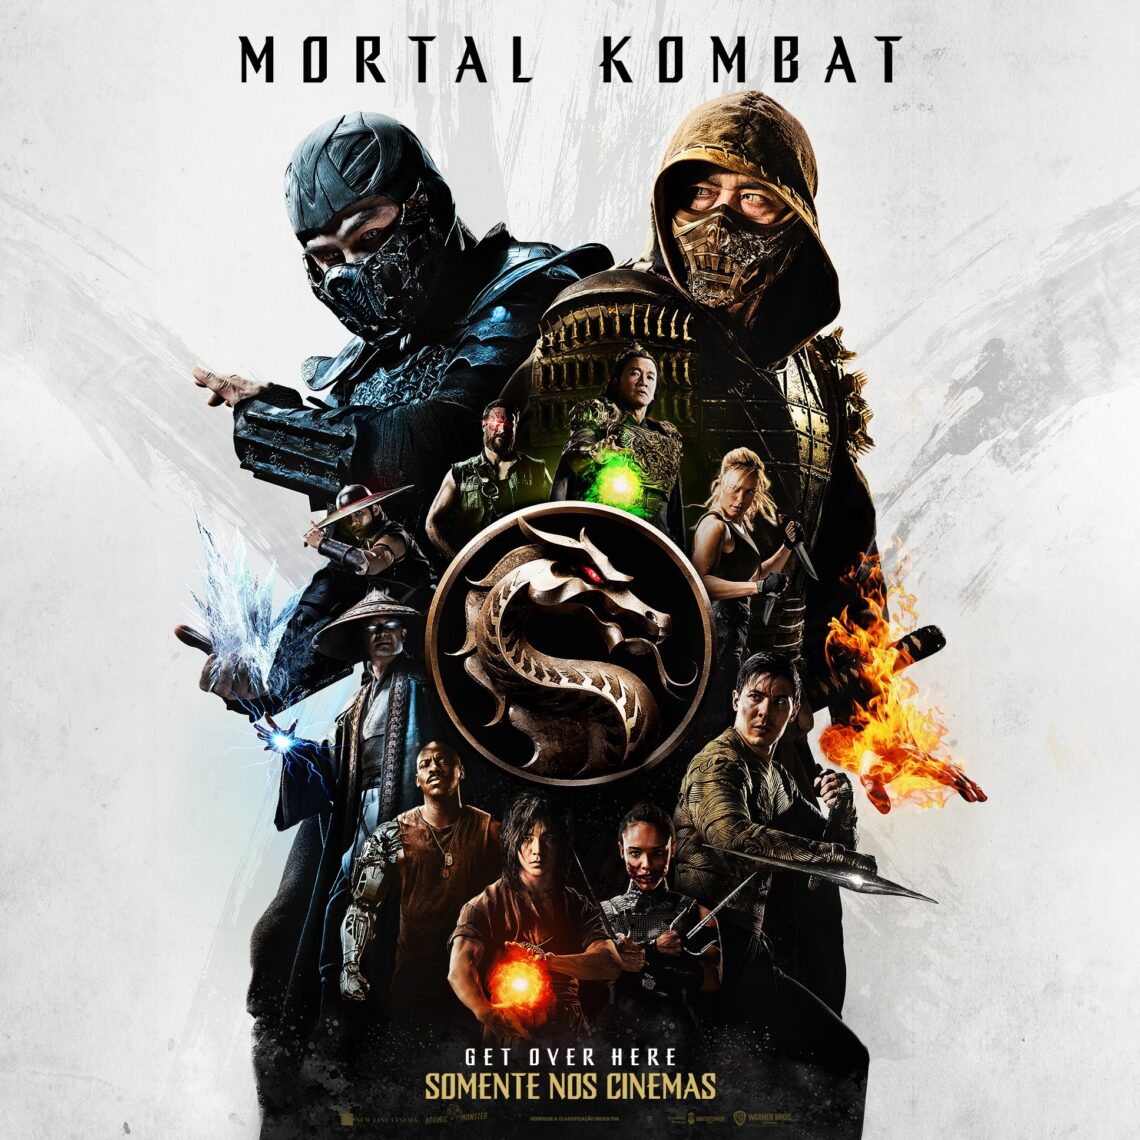 Veja INCRÍVEL novo poster para o reboot de Mortal Kombat